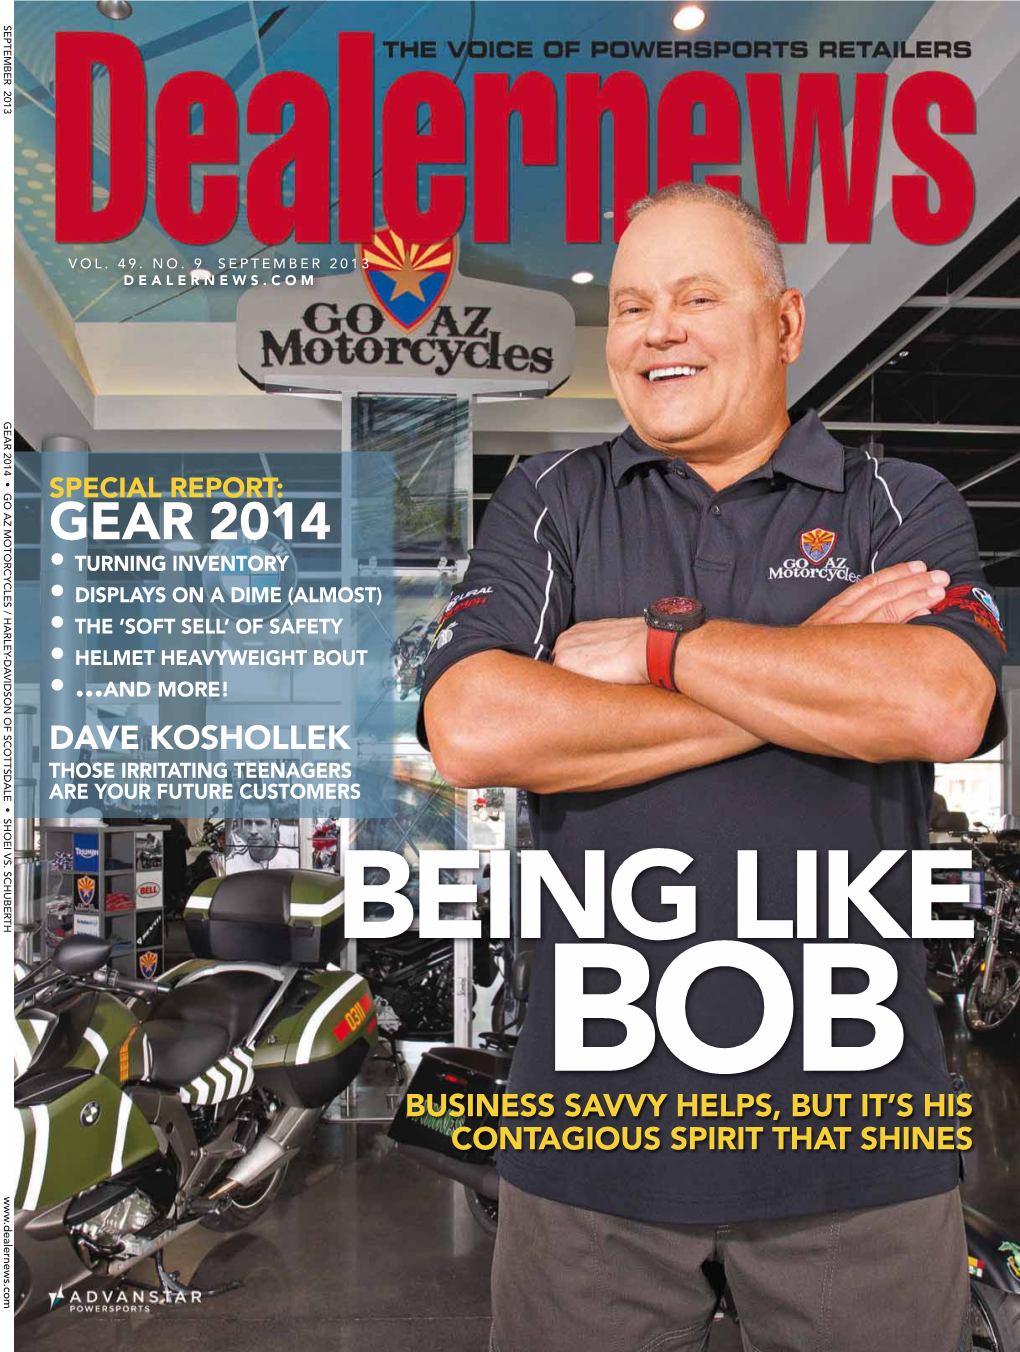 Gear 2014 Special Report